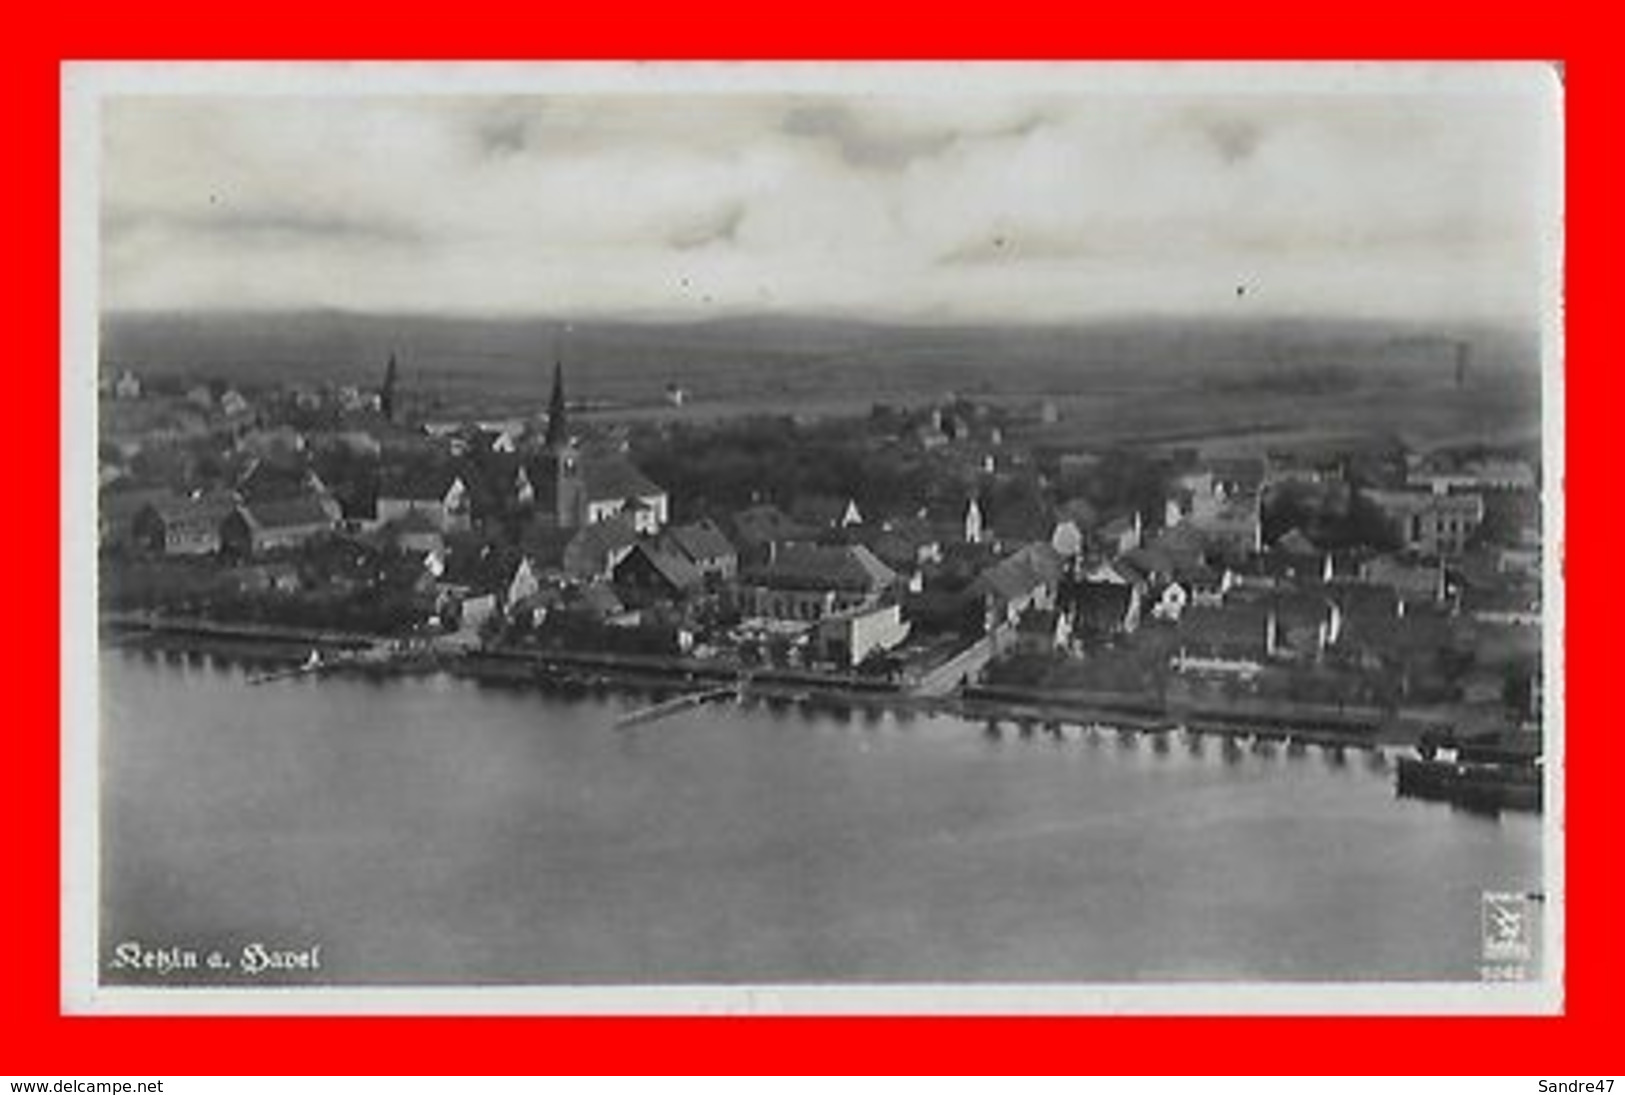 CPA KETZIN A. HAVEL (Allemagne)  Vue Panoramique...L457 - Ketzin